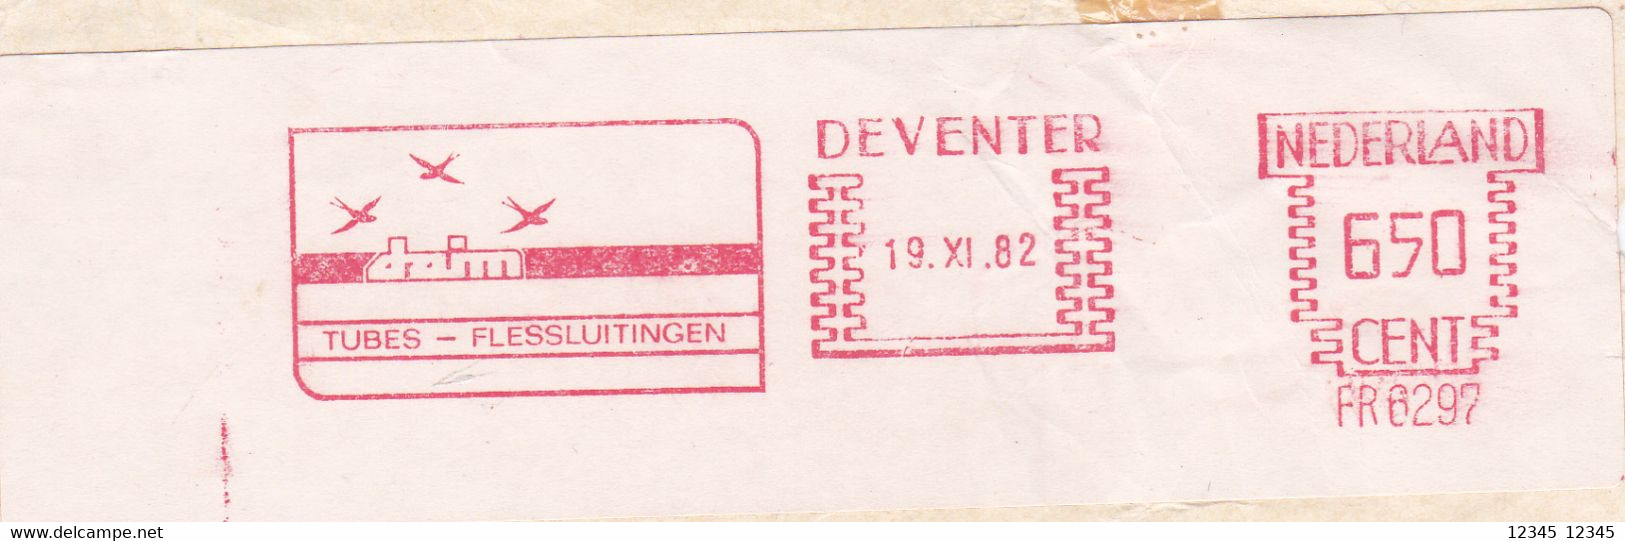 Nederland 1982, Daim Tubes-flessluitingen, Deventer - Maschinenstempel (EMA)